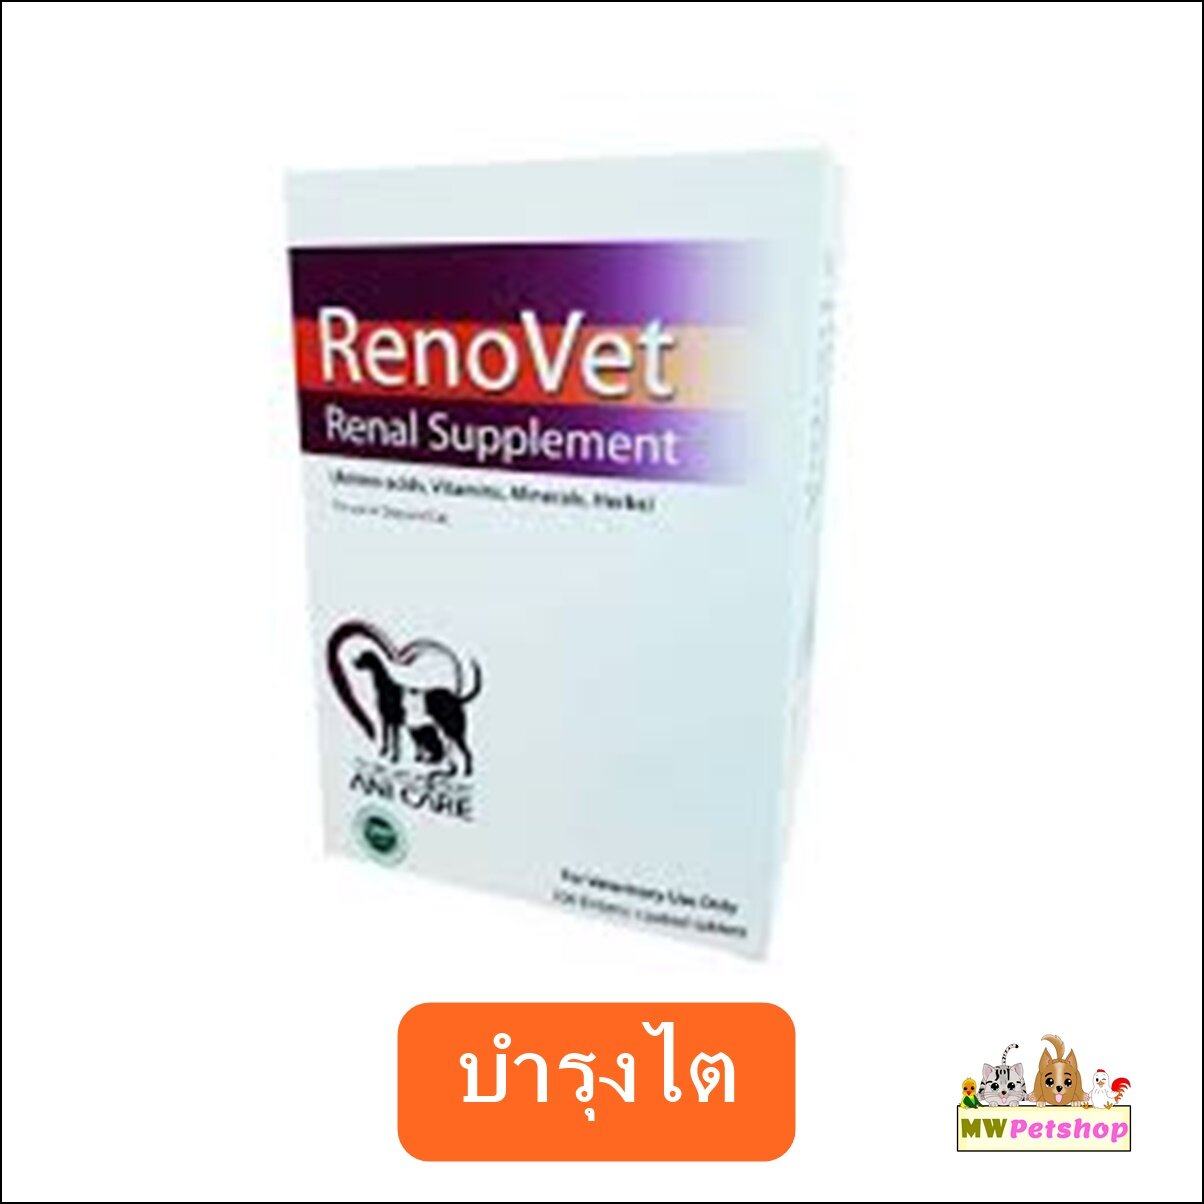 Renovet Renal Supplement วิตามิน บำรุงไต แบบเม็ด (1แผง) EXP14/06/22